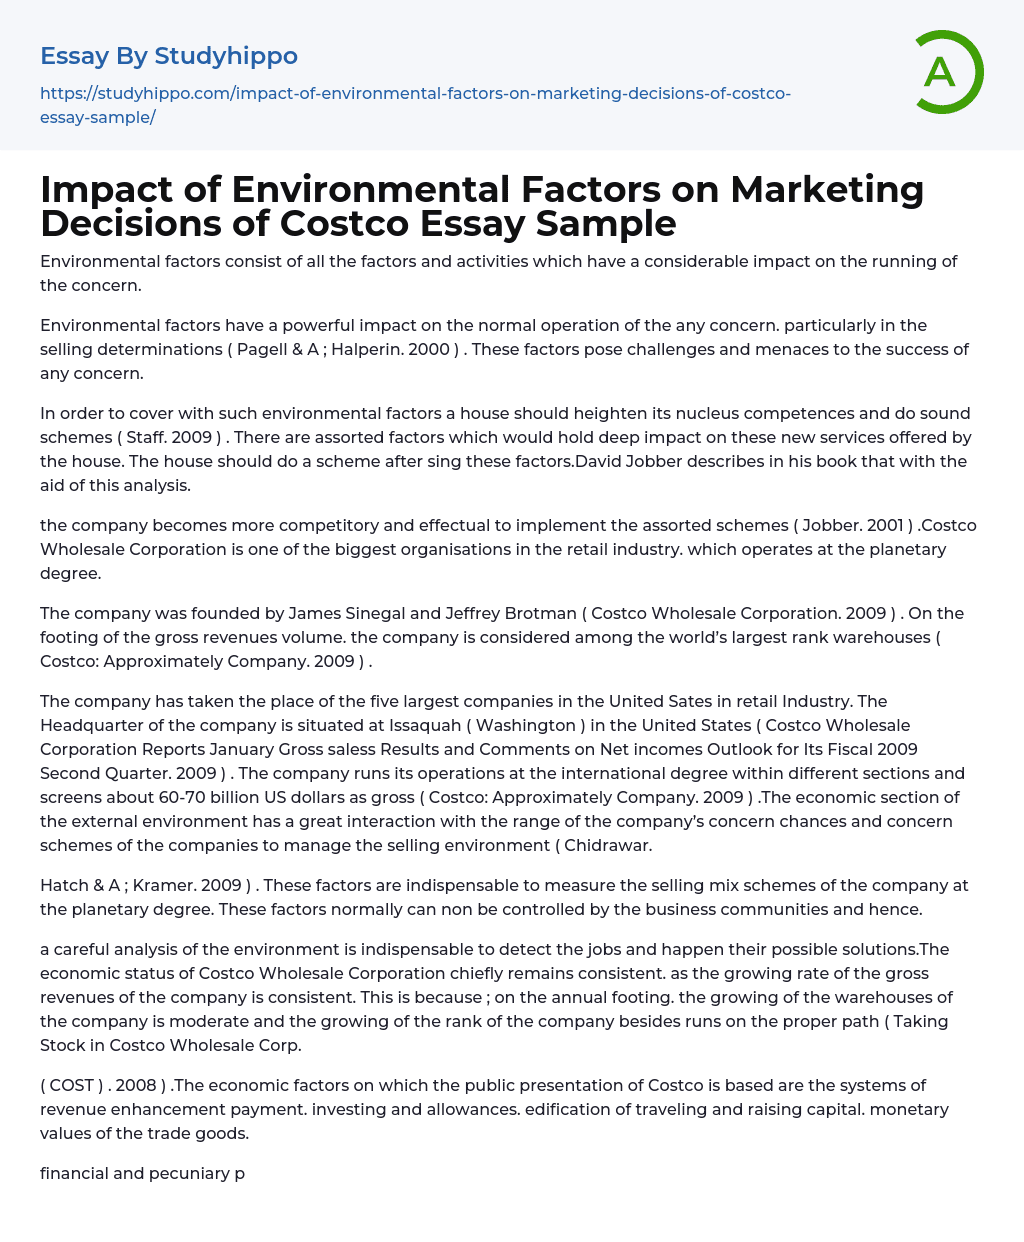 Impact of Environmental Factors on Marketing Decisions of Costco Essay Sample